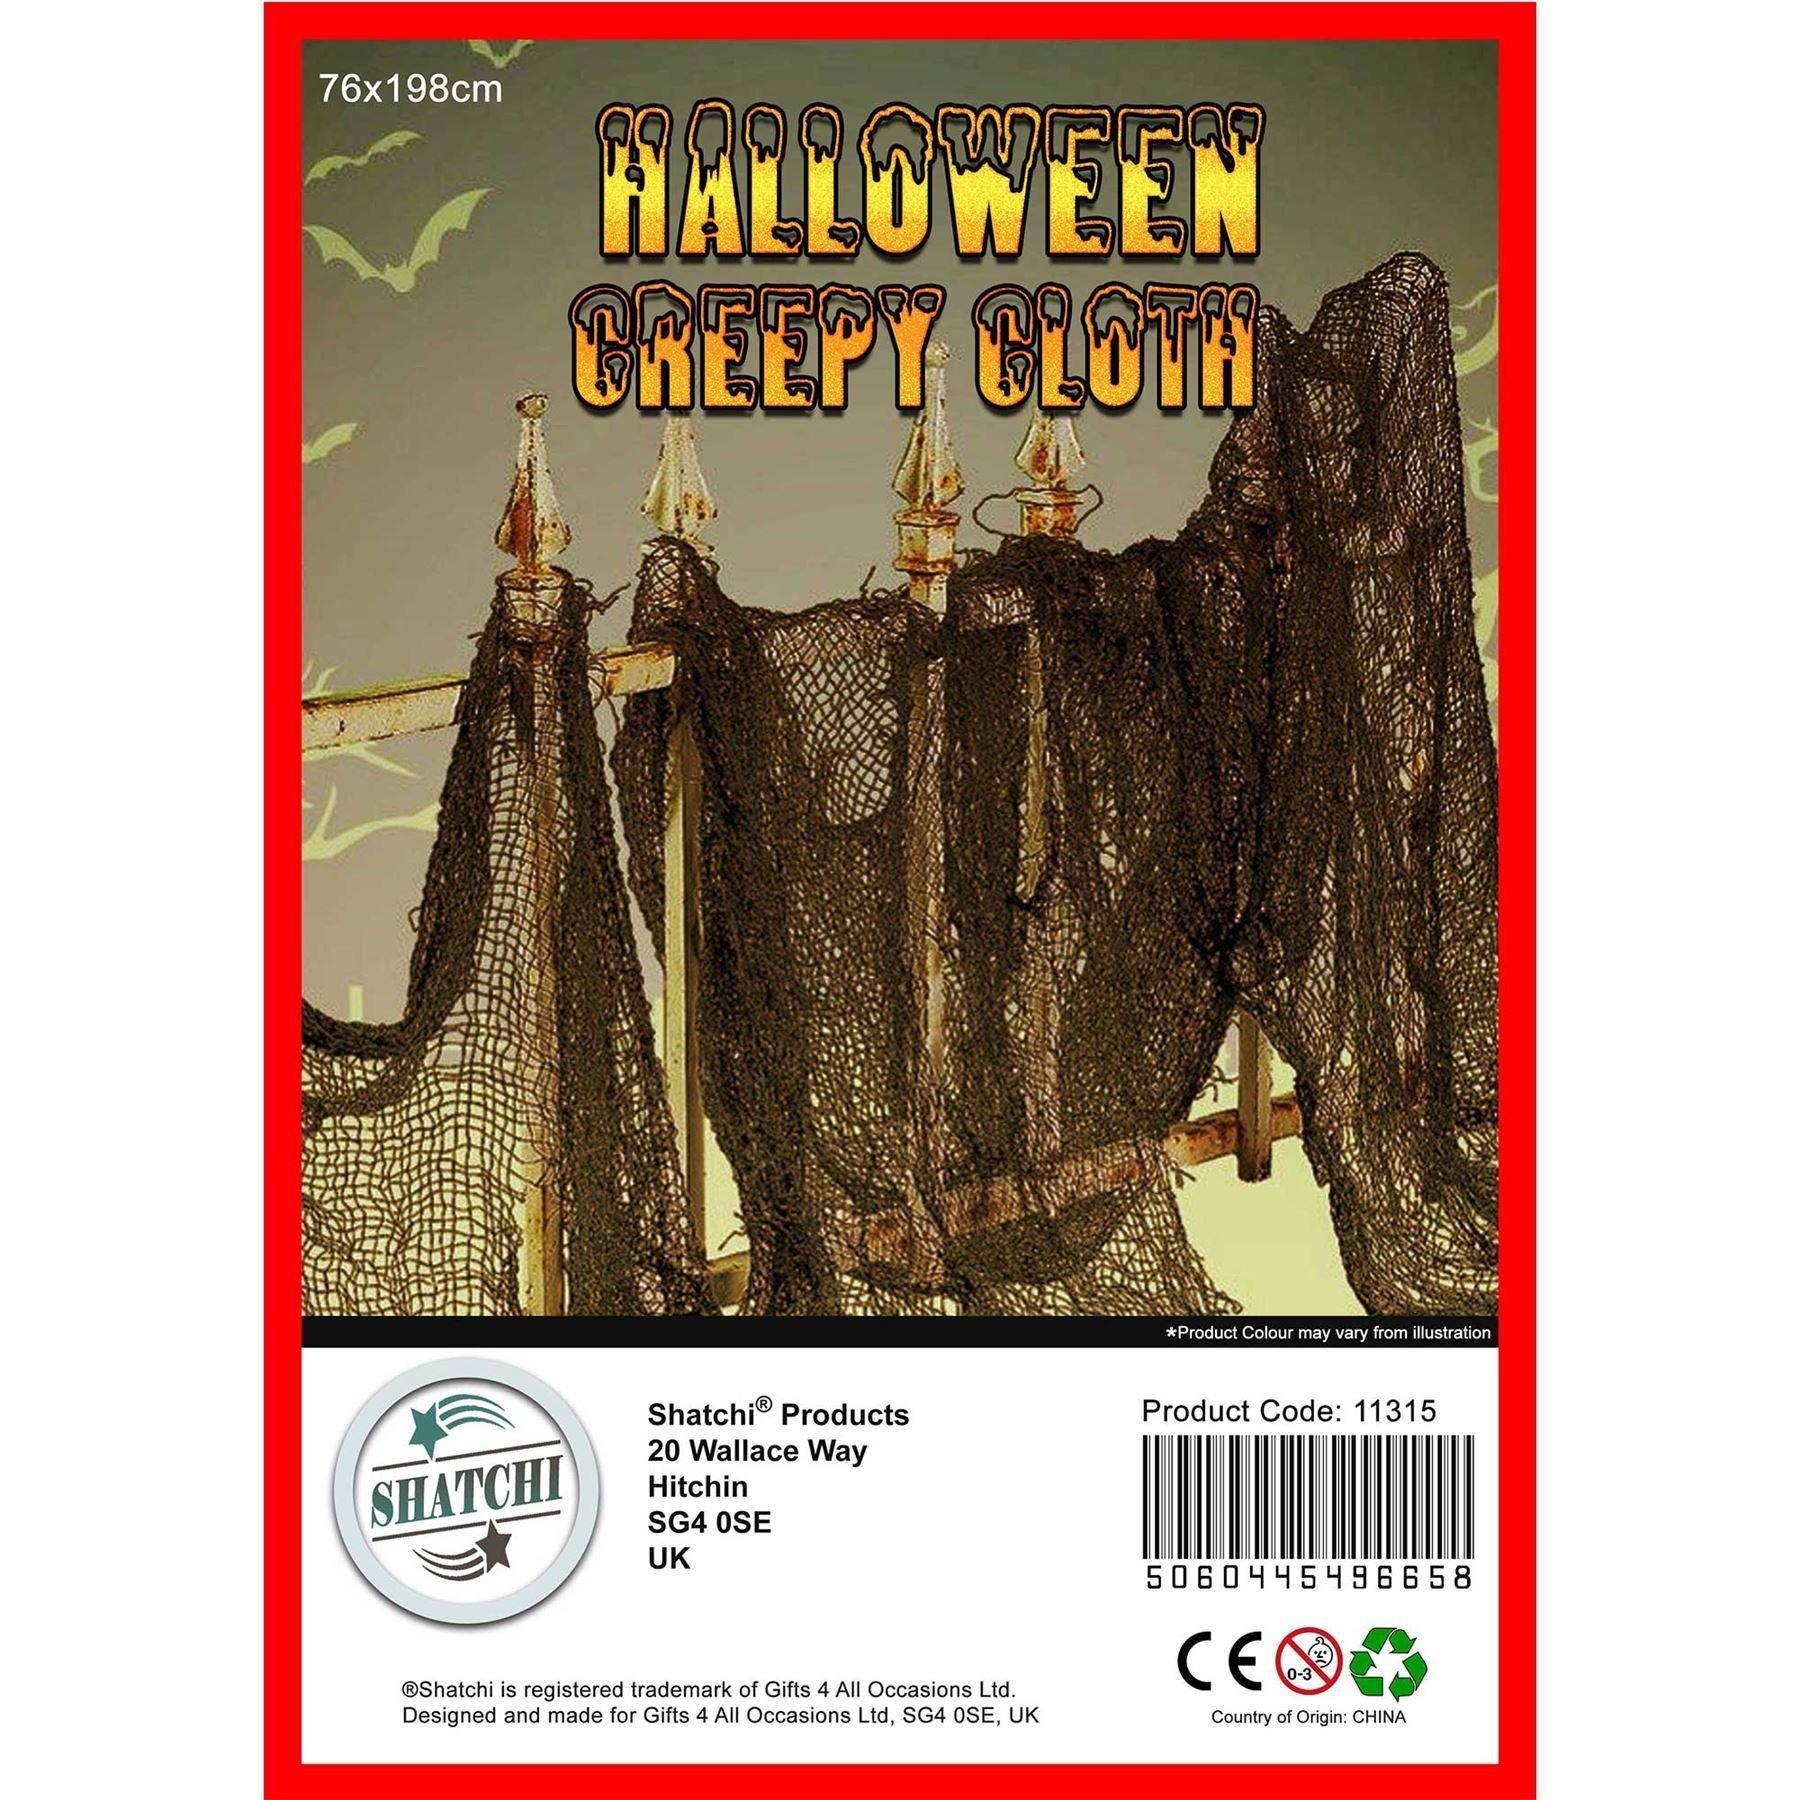 100 Large Black Mesh Creepy Cloth Halloween Party Decorations - Wholesale Bulk Buy